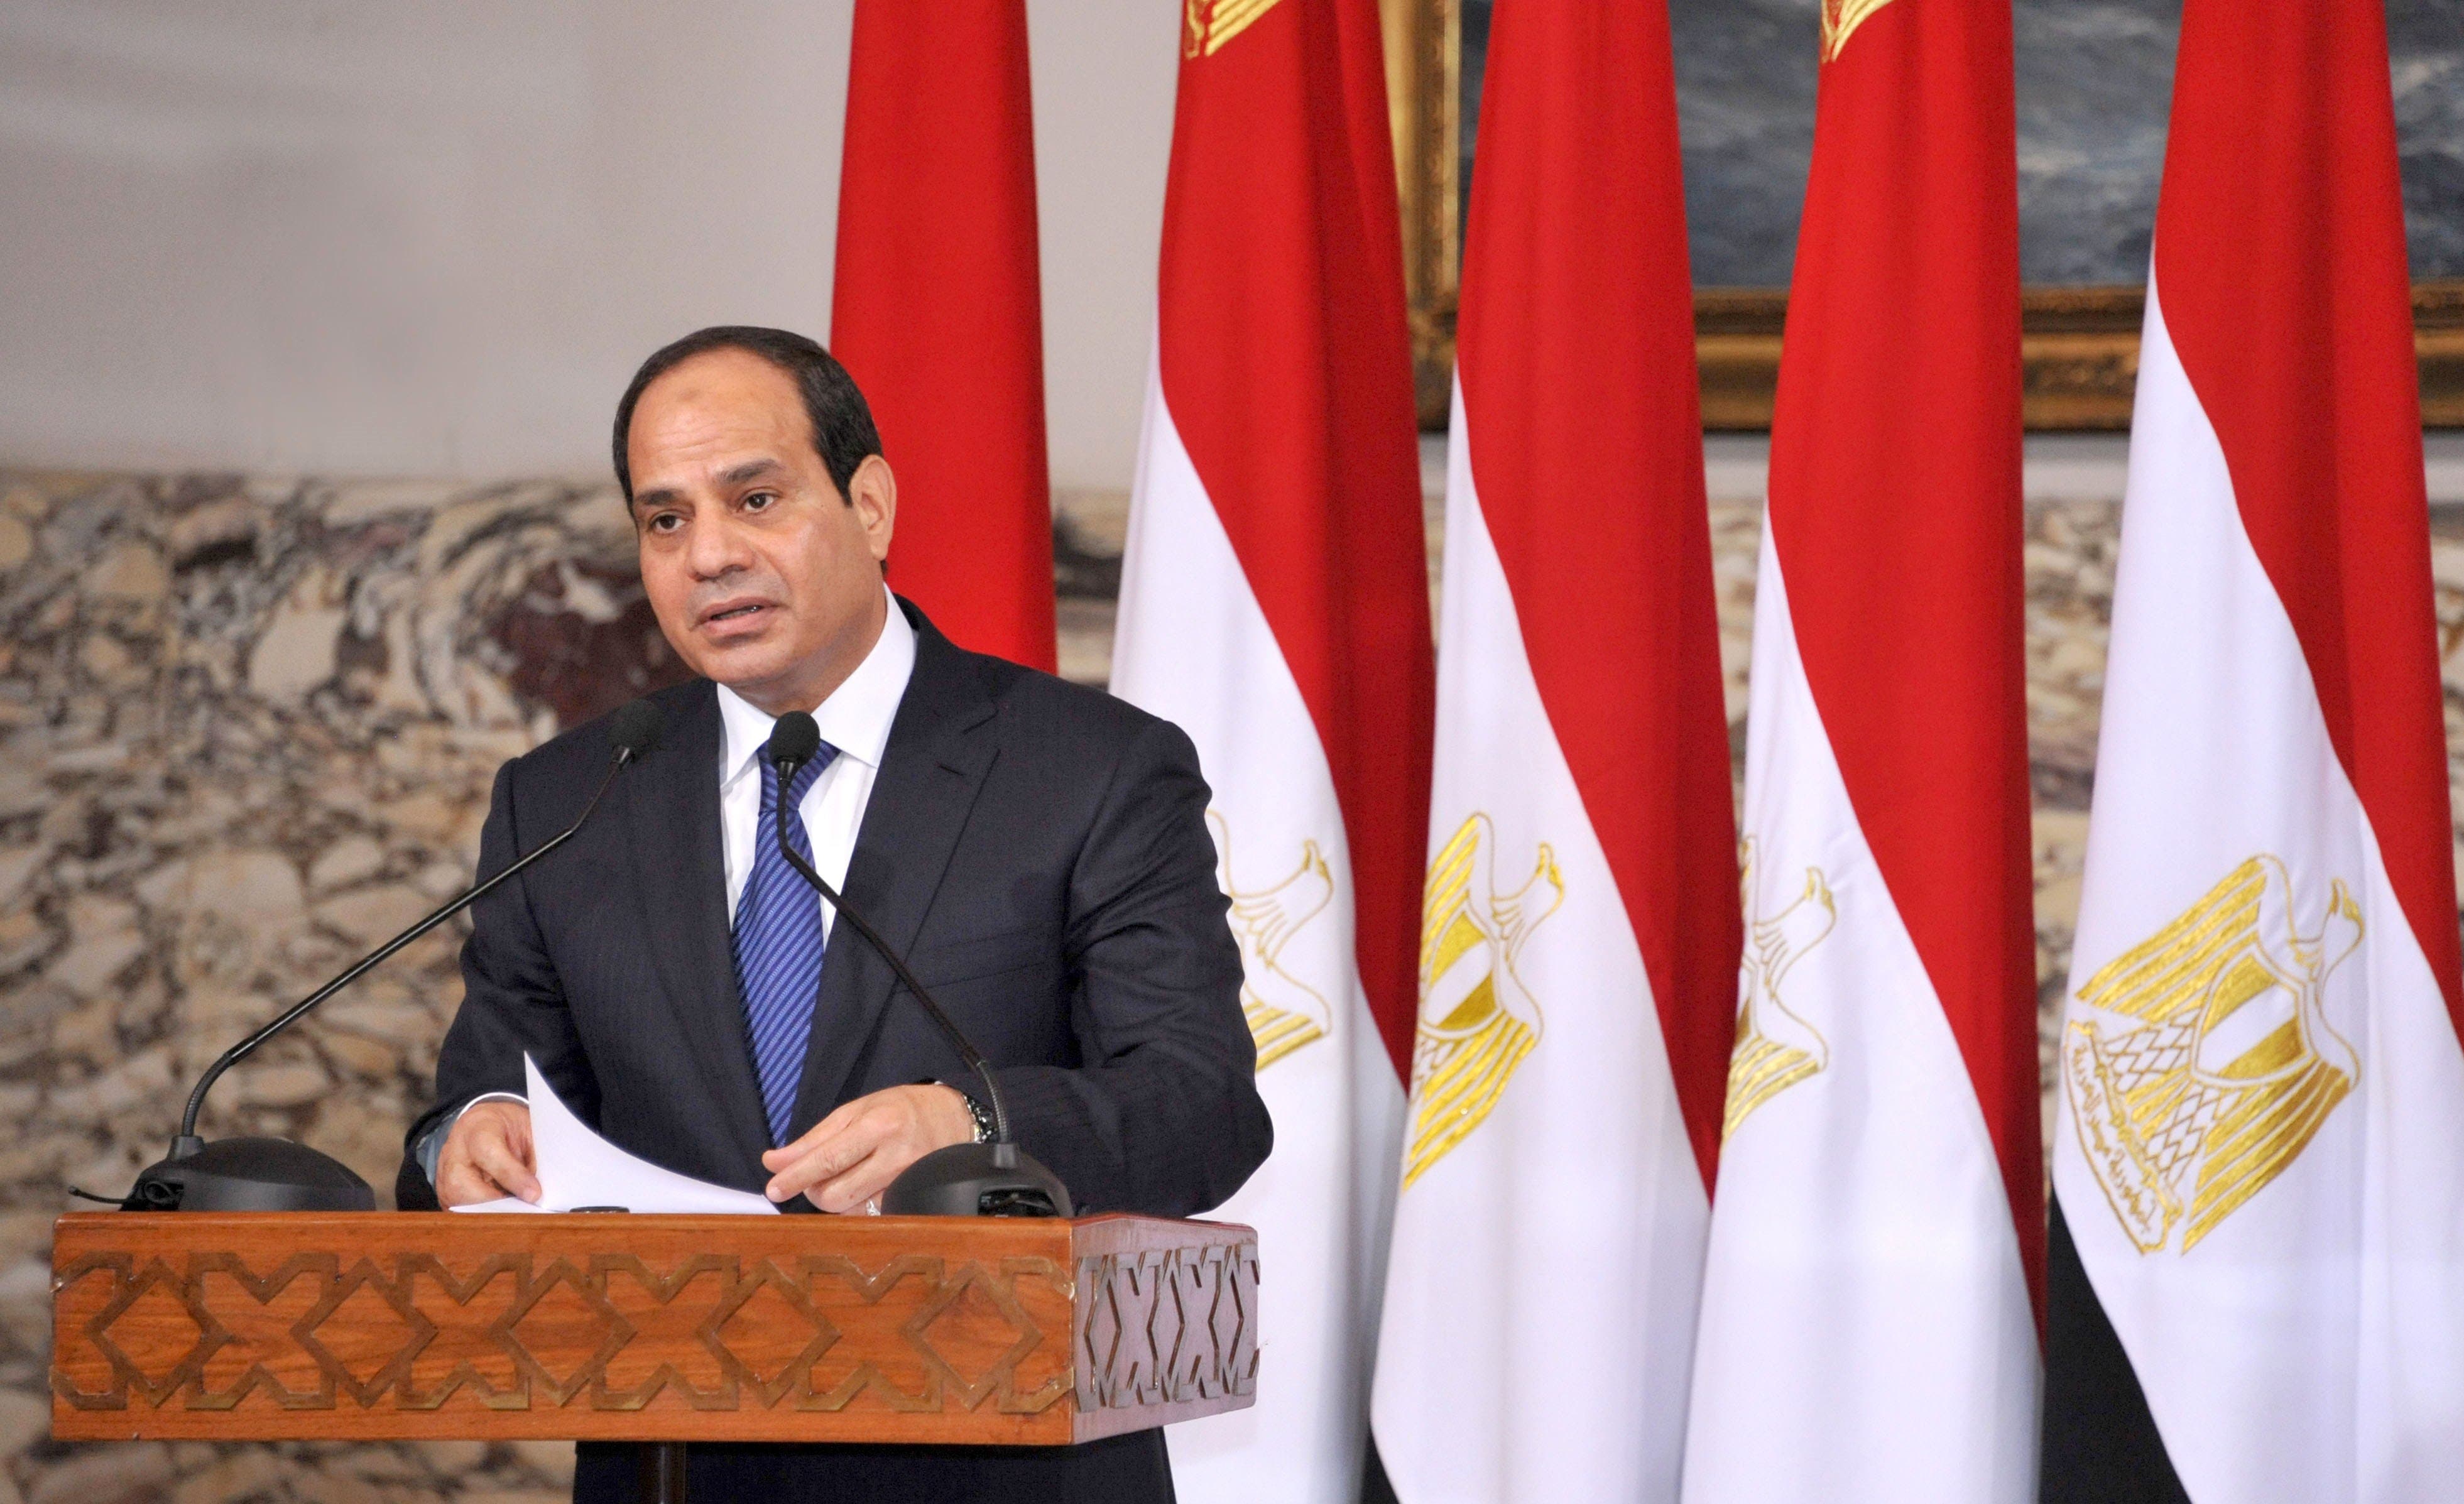 Egypt's new president: Abdel Fattah al-Sisi